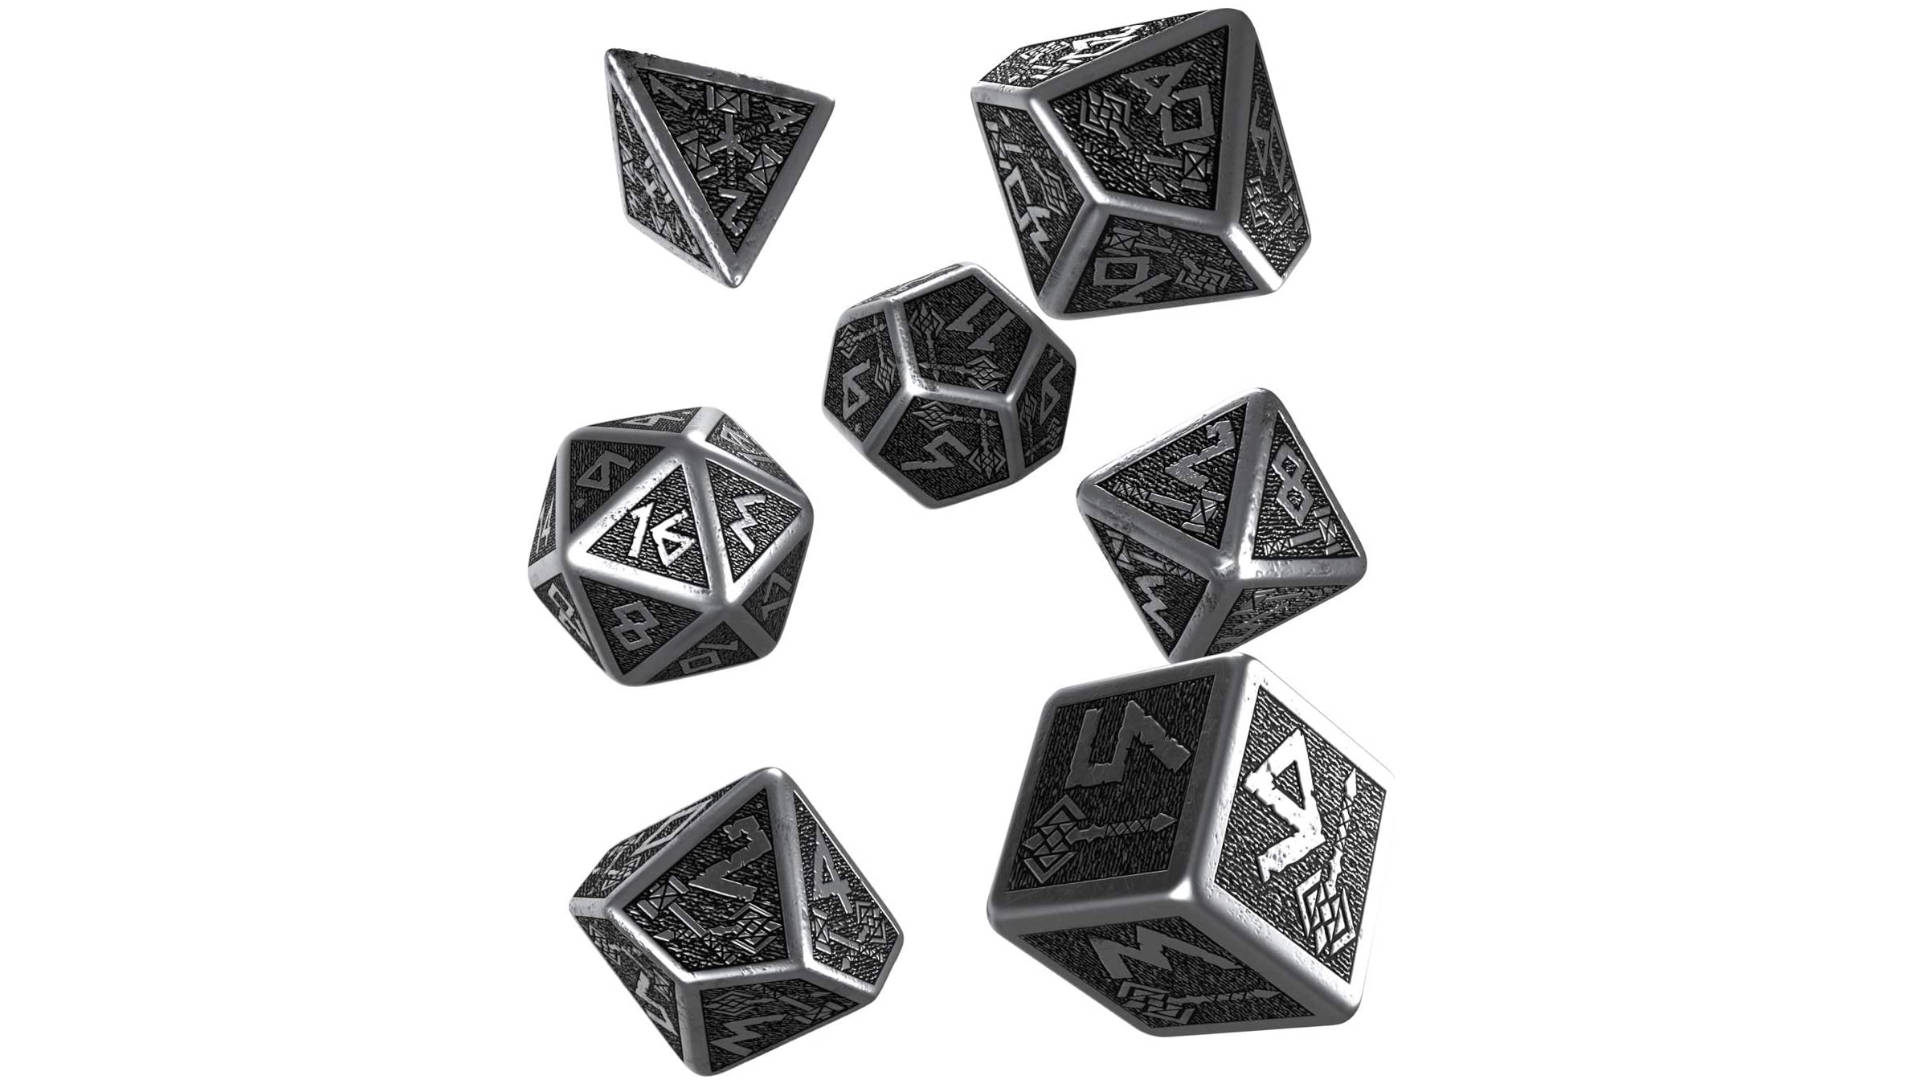 Black & White DRAGON dice set by Q-workshop for D&D RPG fantasy 